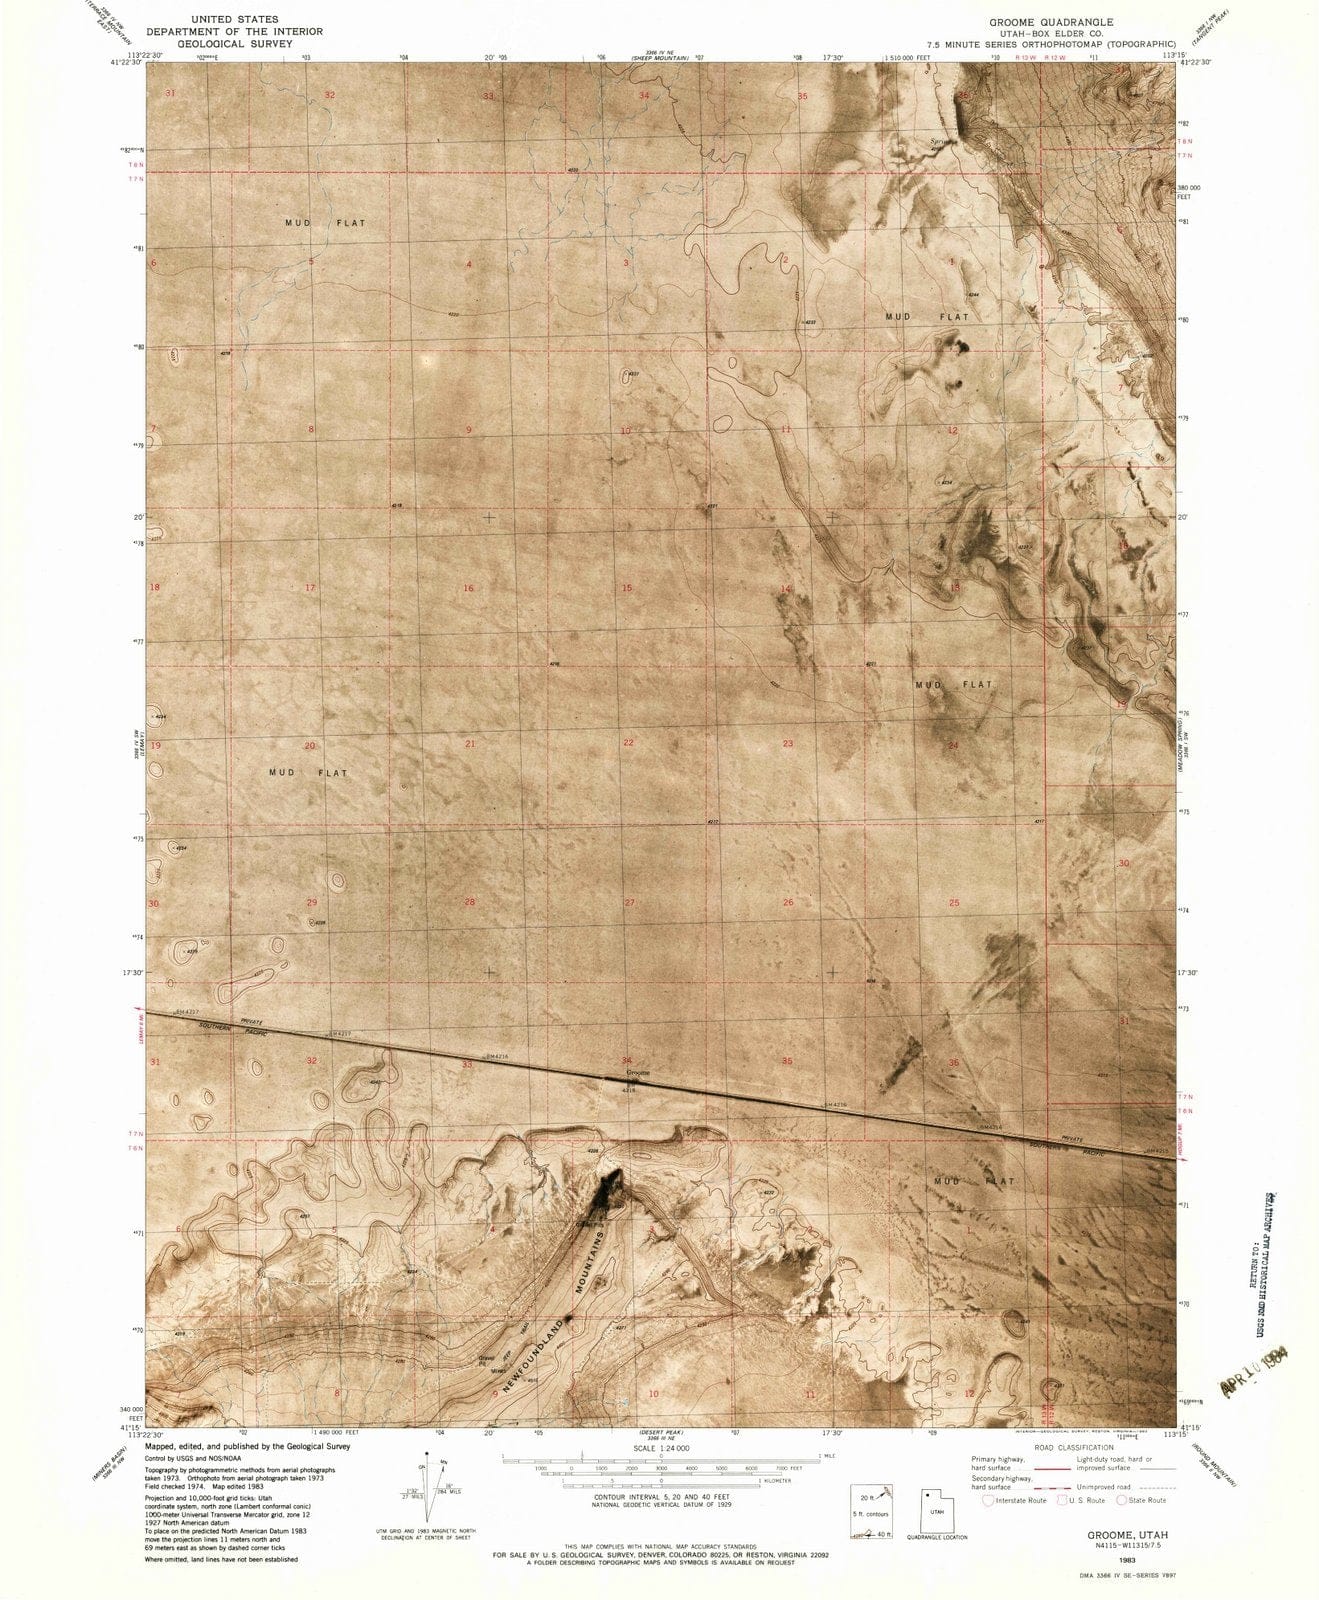 1983 Groome, UT - Utah - USGS Topographic Map